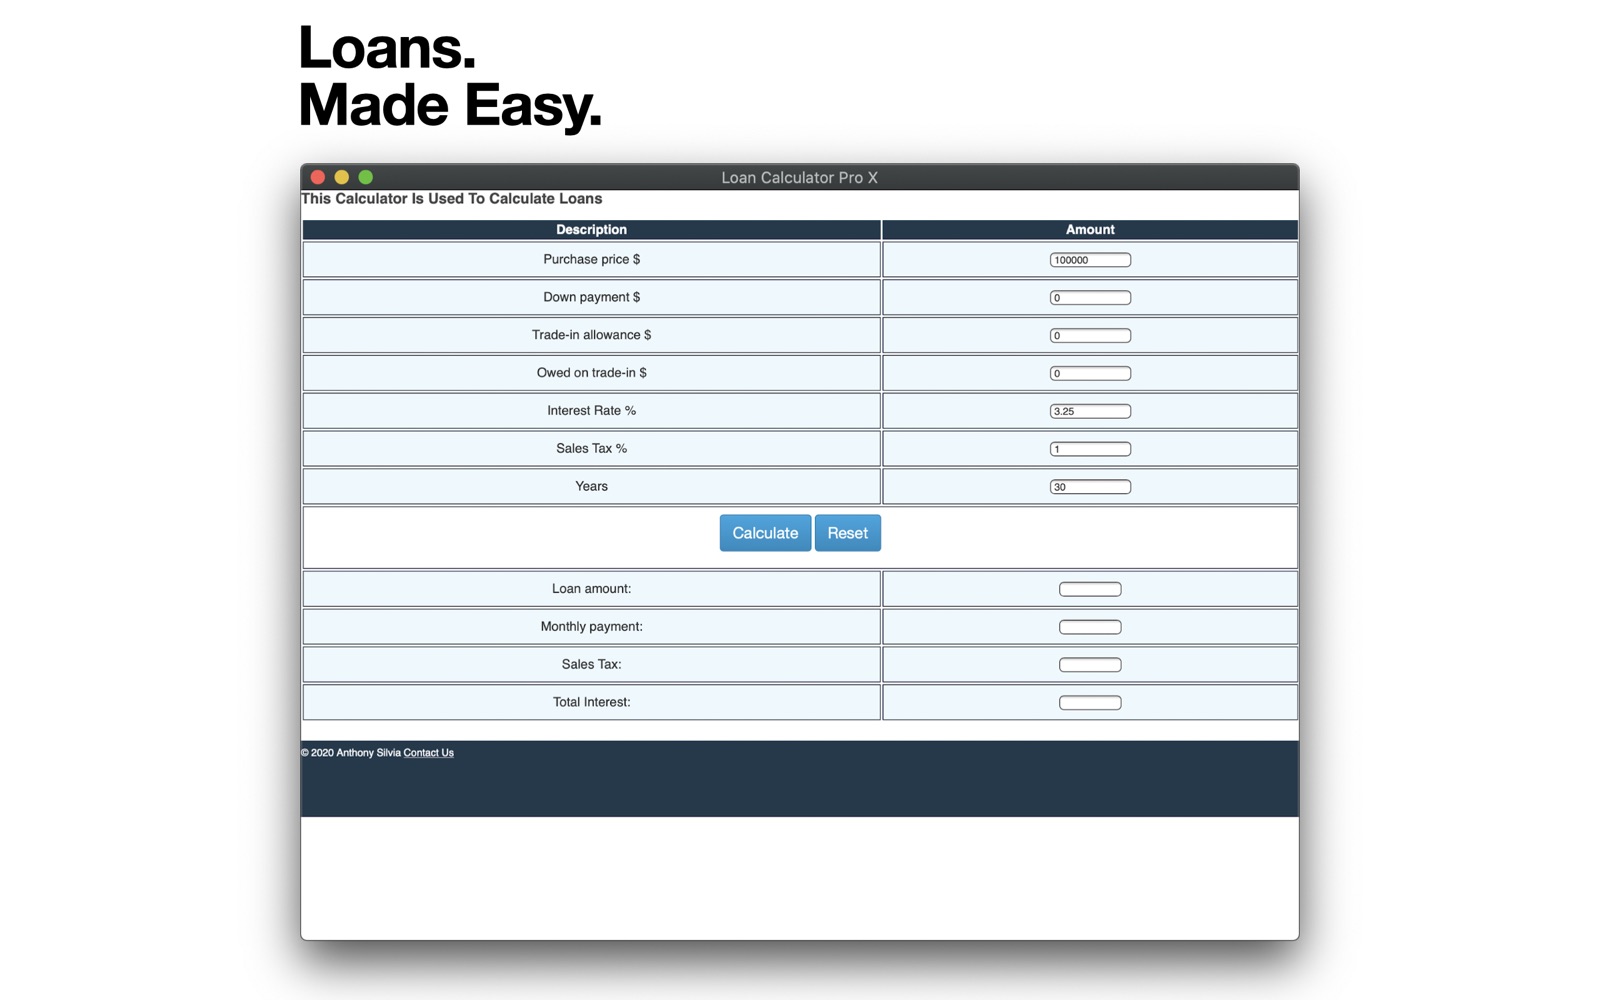 Loan Calculator Pro X 1.0 : Main Window